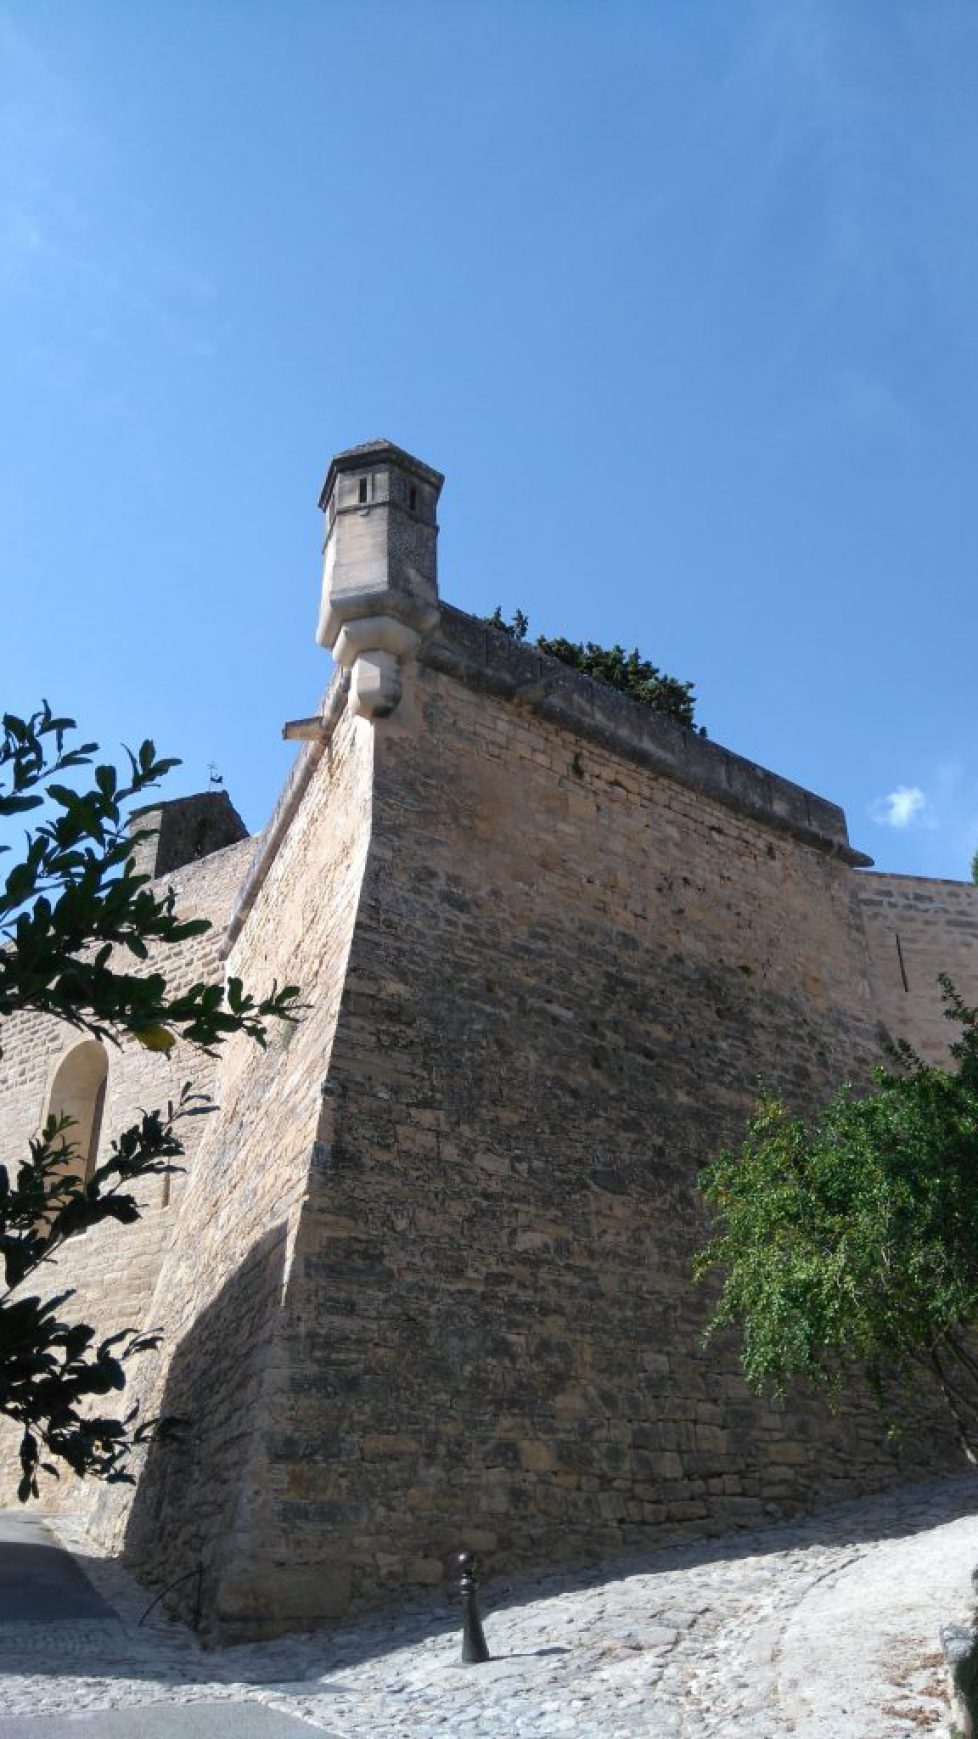 PHOTO 1 Aperçu du clocher-mur à quatre baies